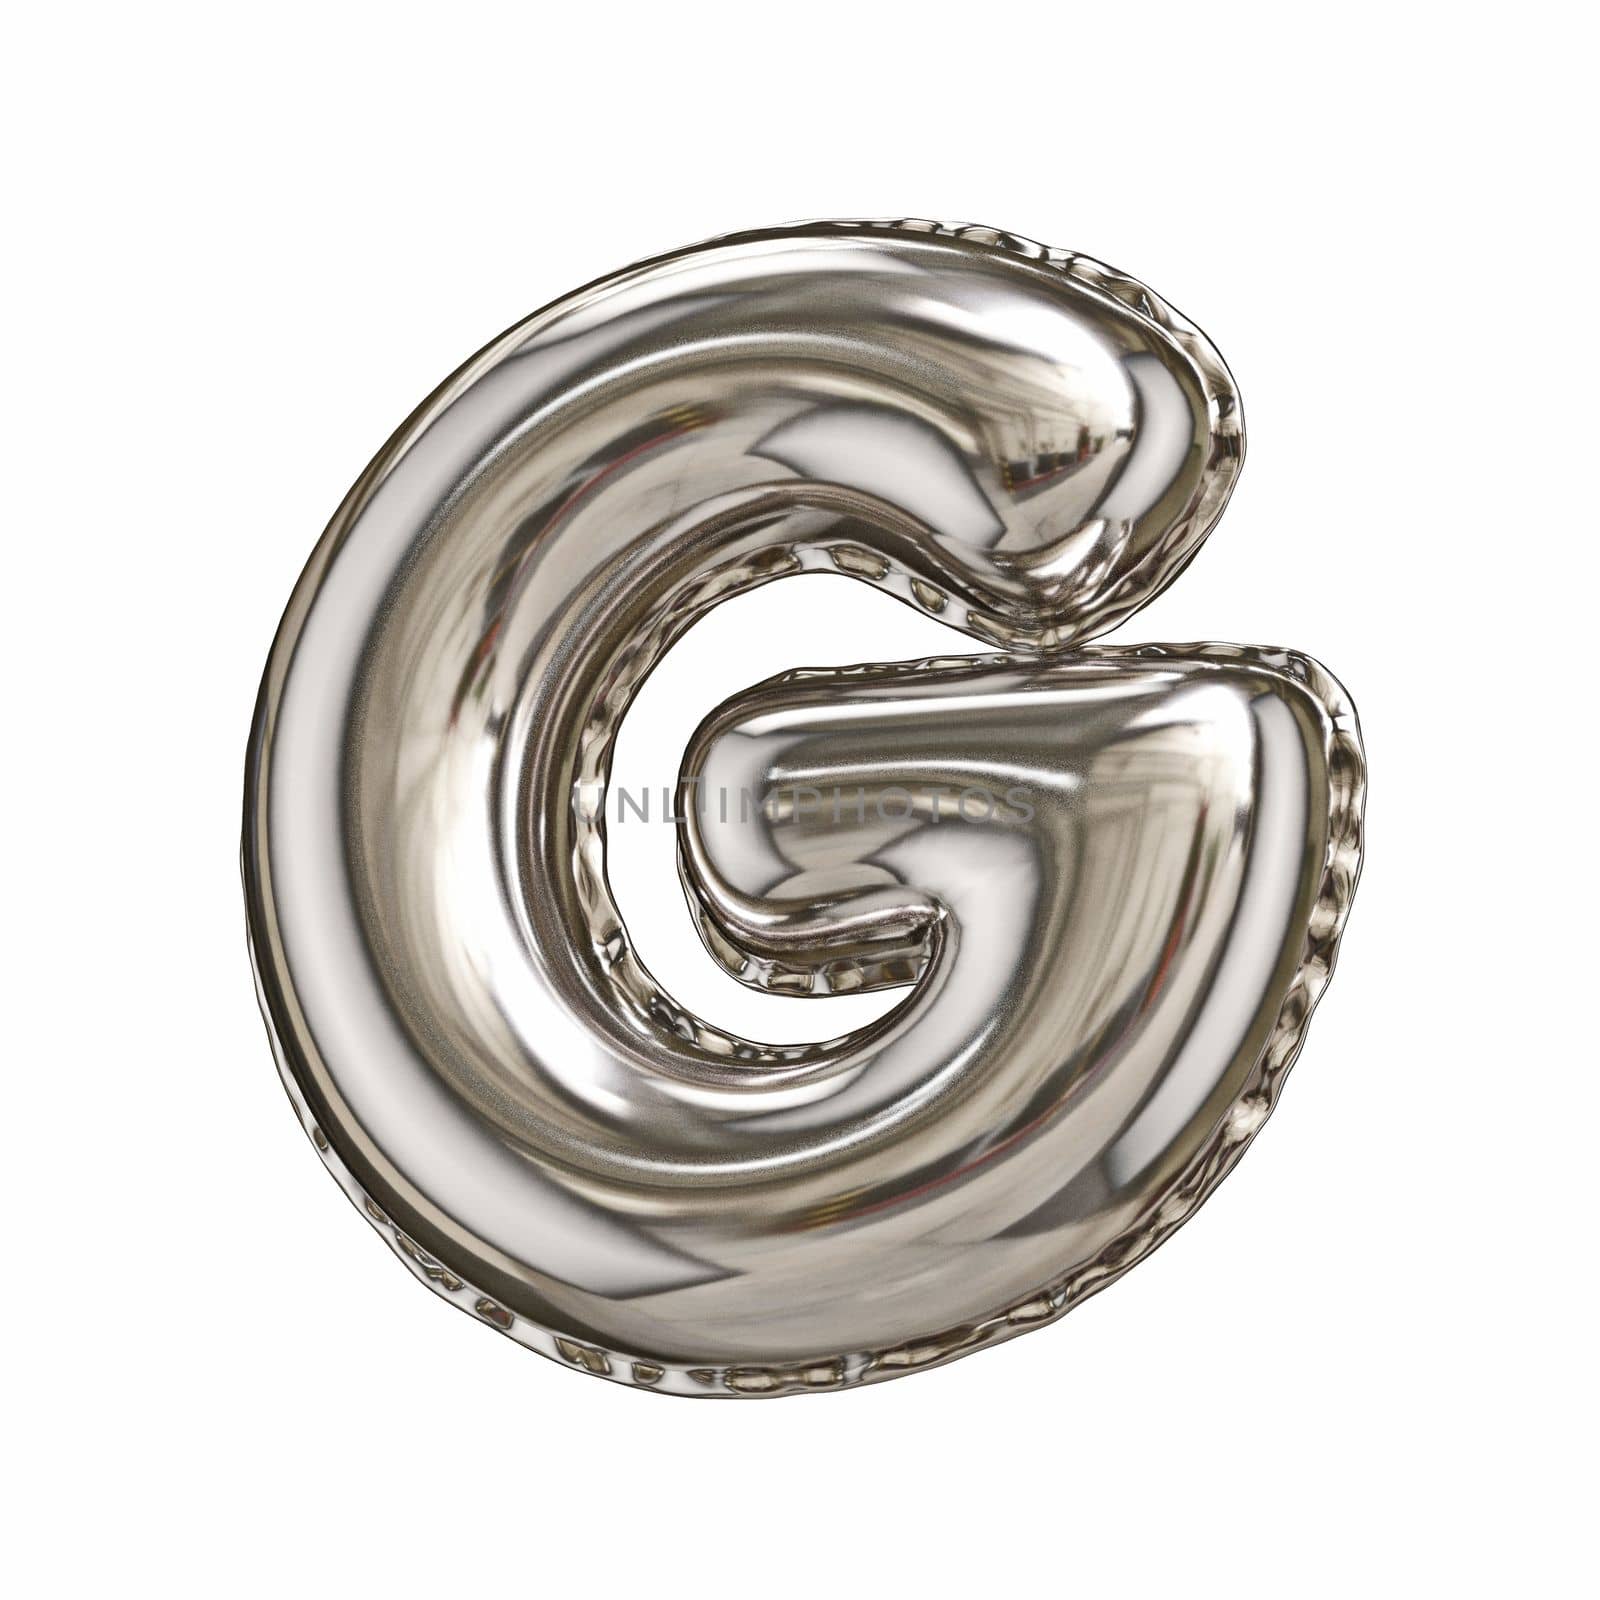 Silver foil balloon font letter G 3D rendering illustration isolated on white background